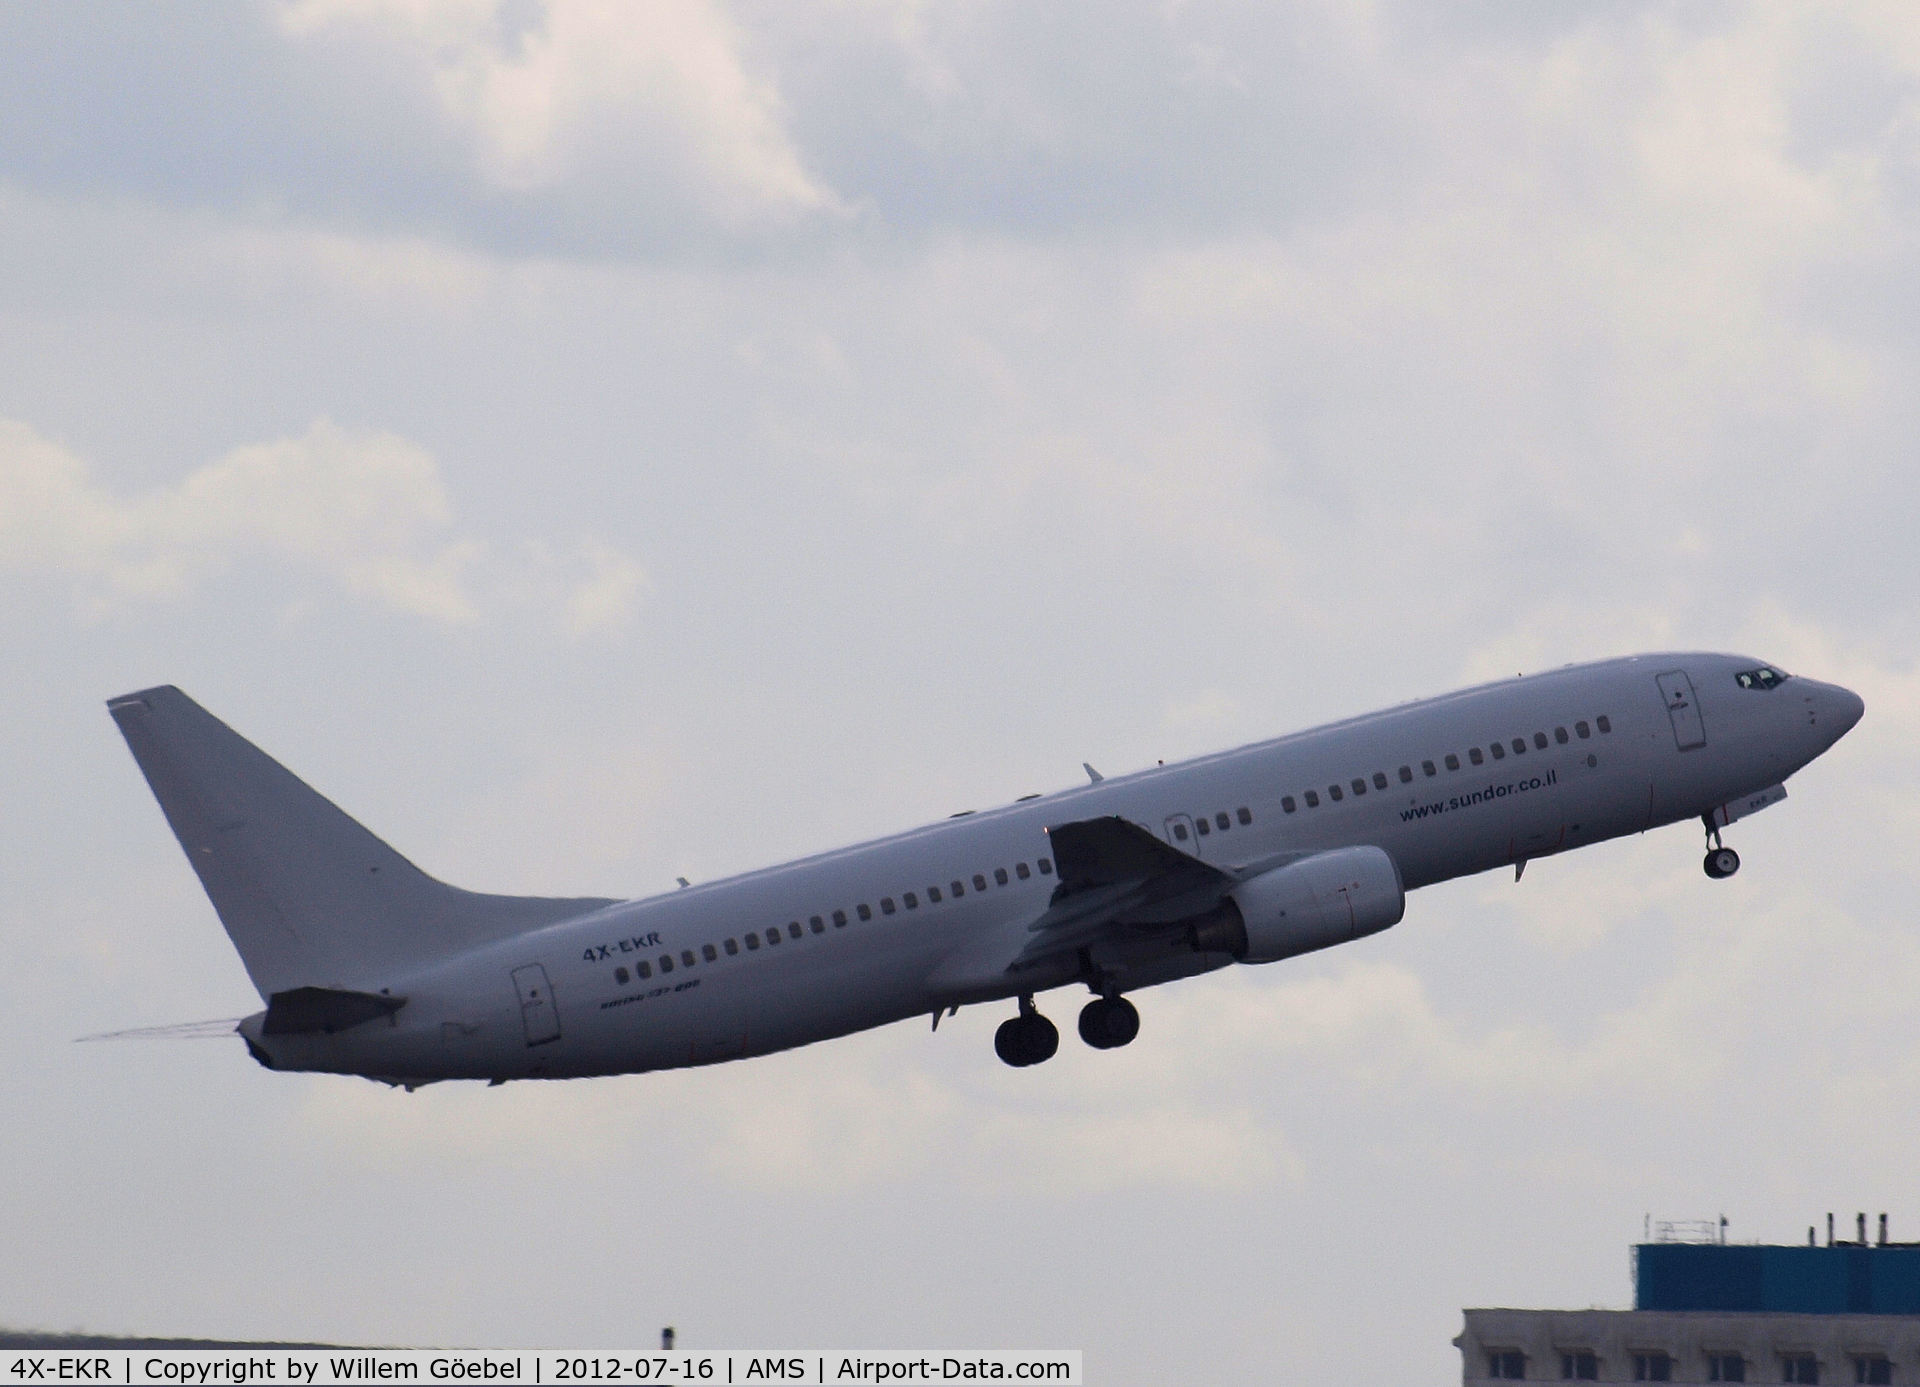 4X-EKR, 2000 Boeing 737-804 C/N 30466, Take off from runway L18 of Schiphol Airport